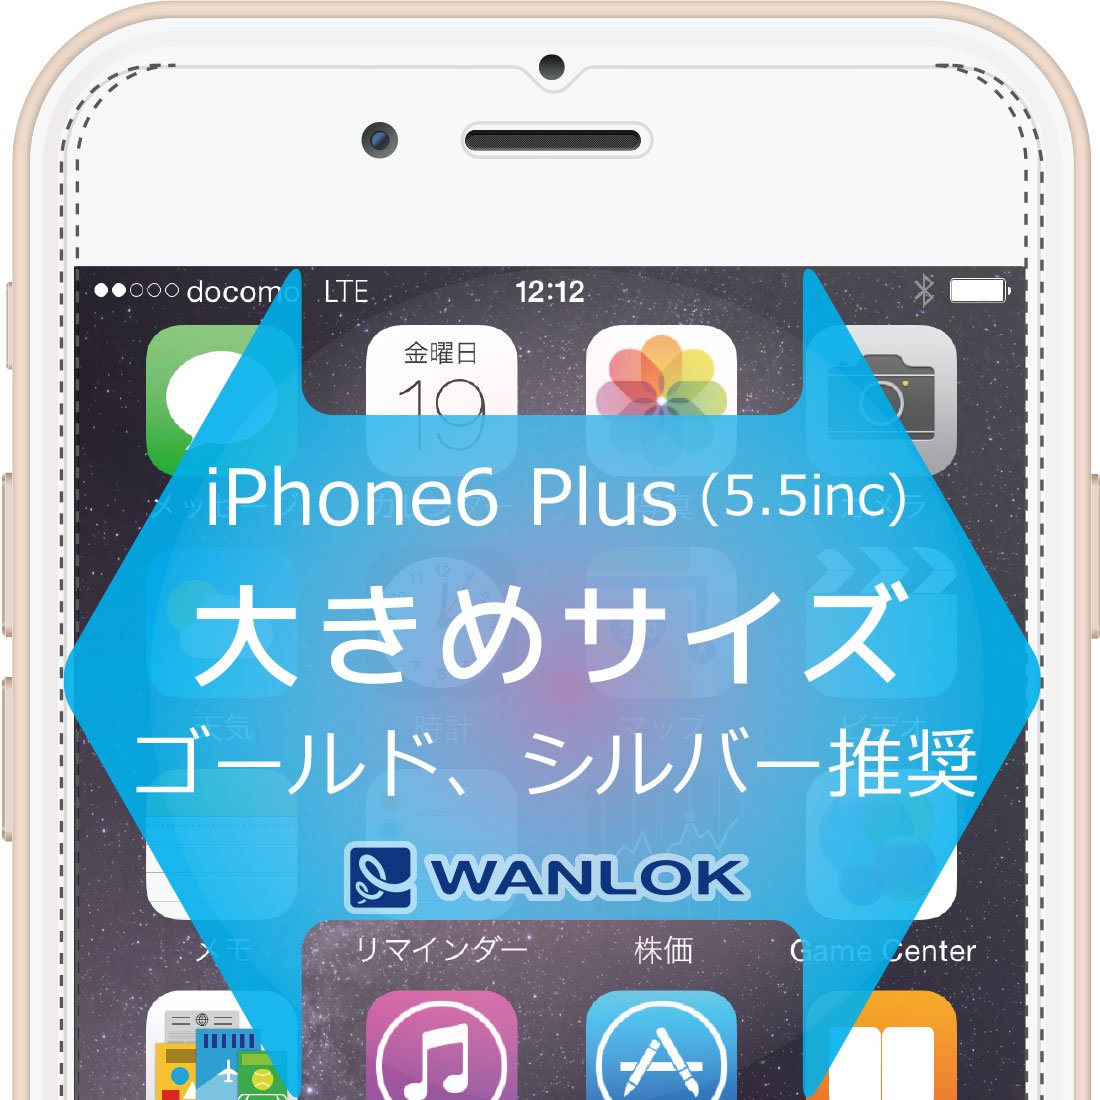 iPhone - WANLOK.com ワンロック公式サイト